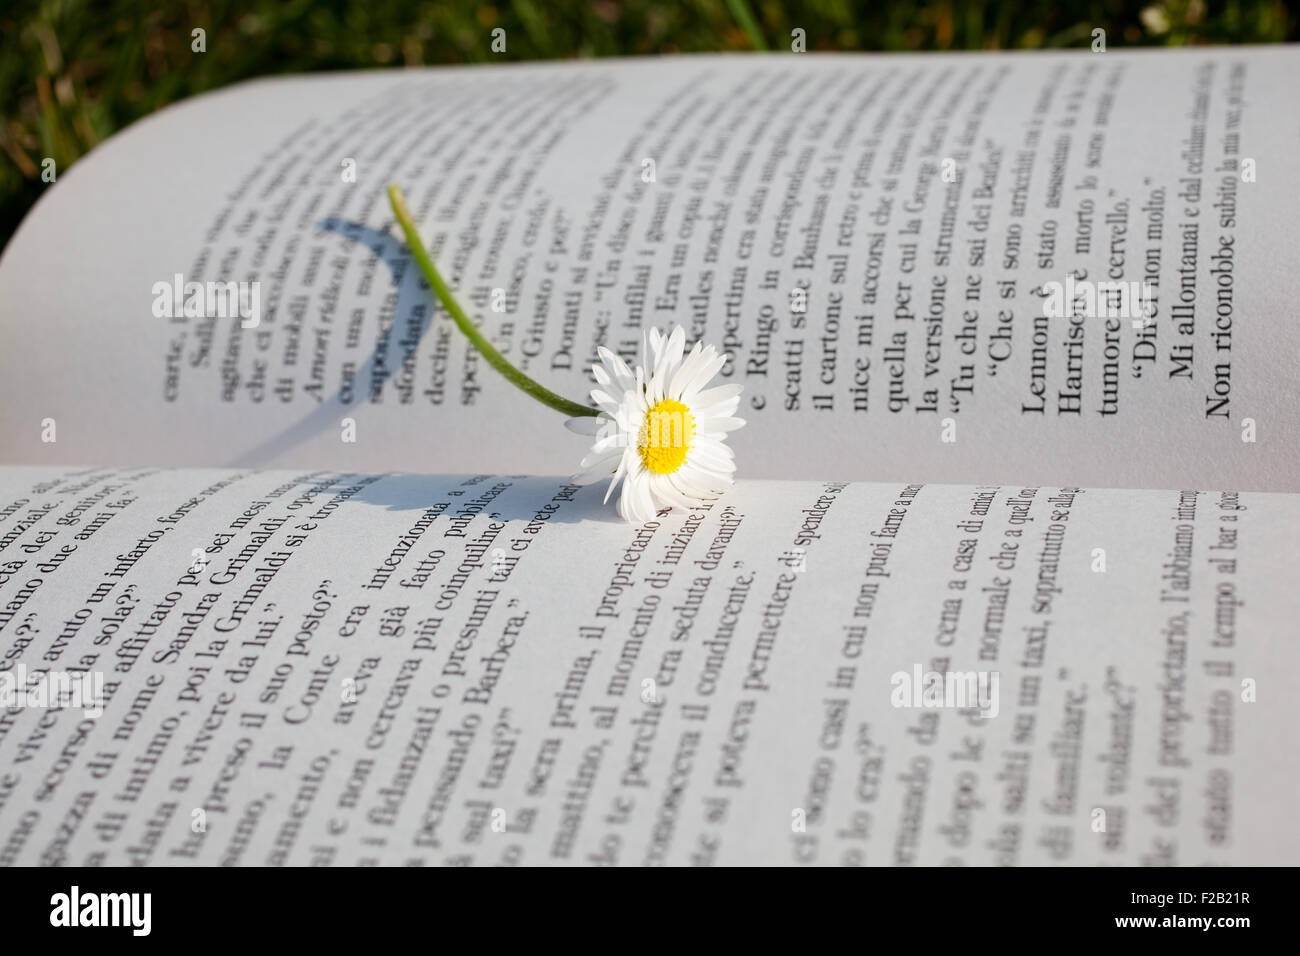 Daisy on a open book Stock Photo